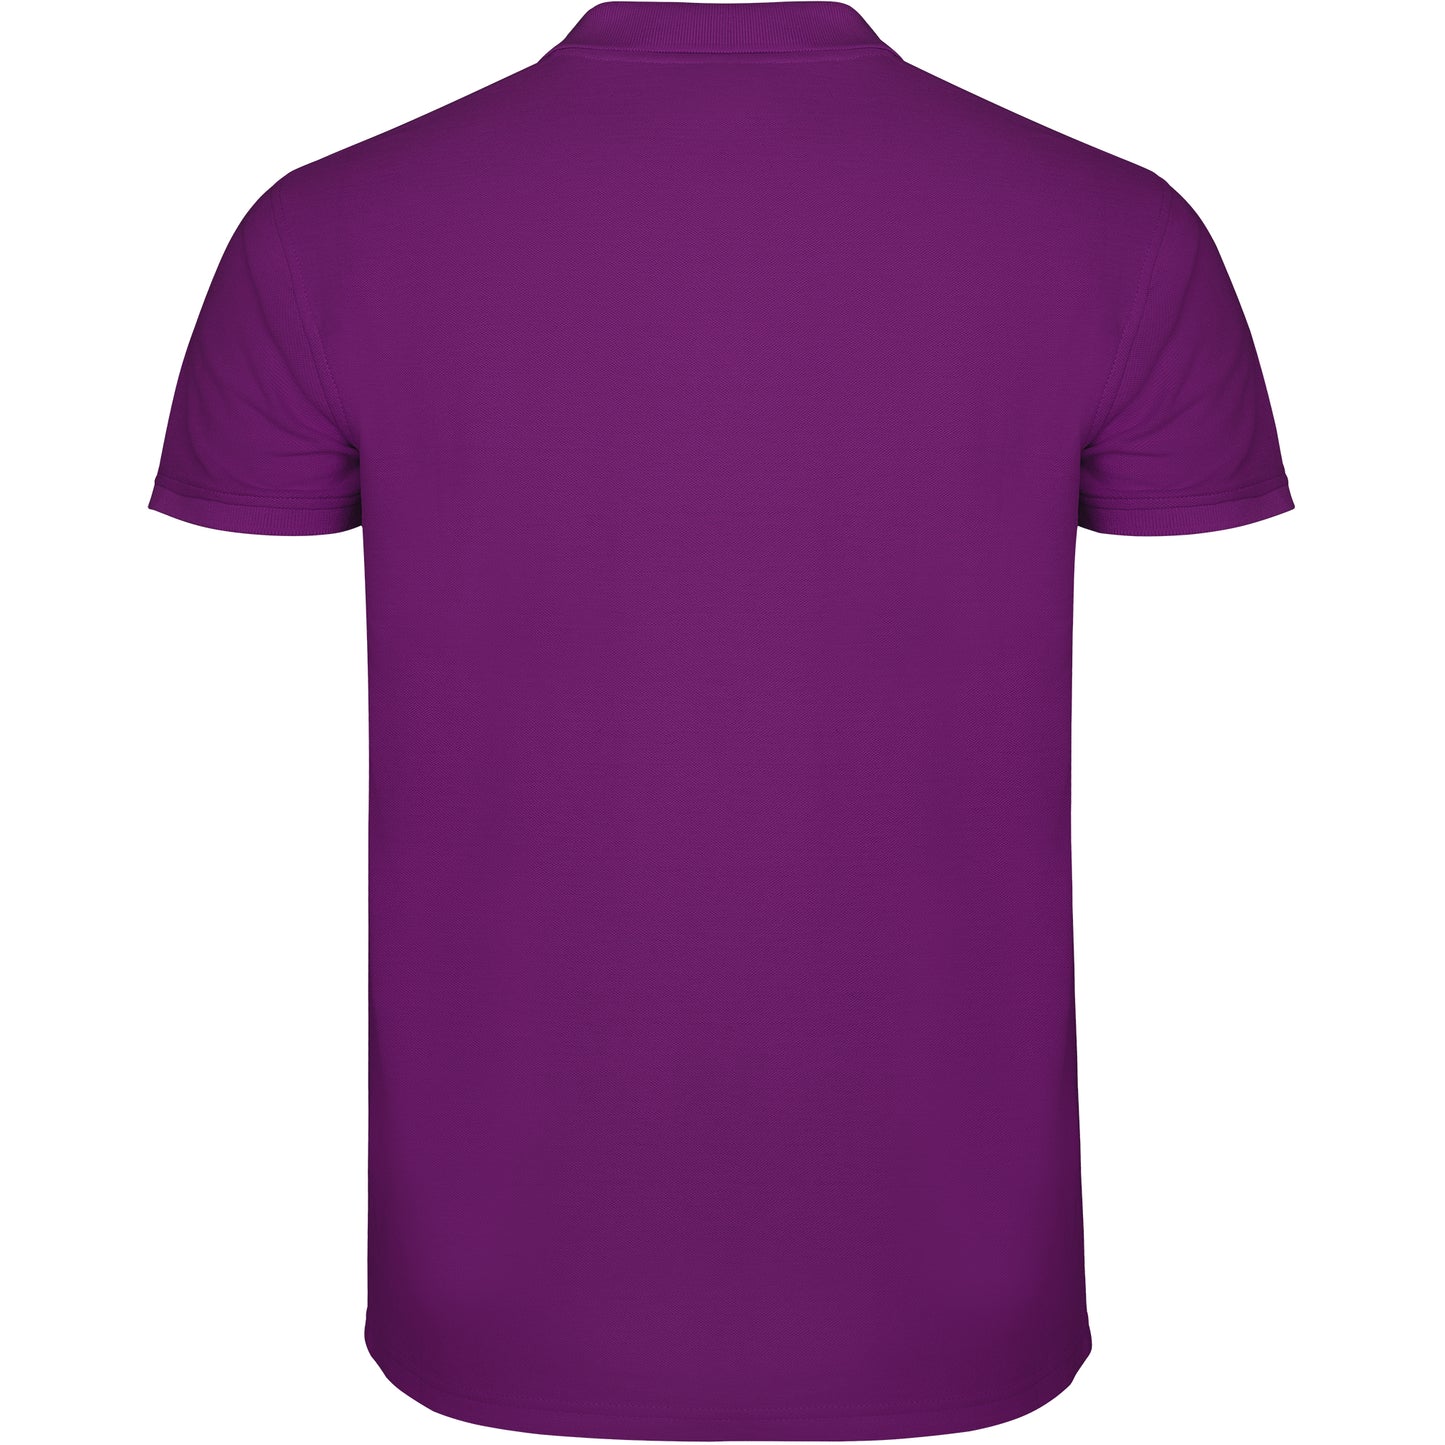 Basic purple polo shirt